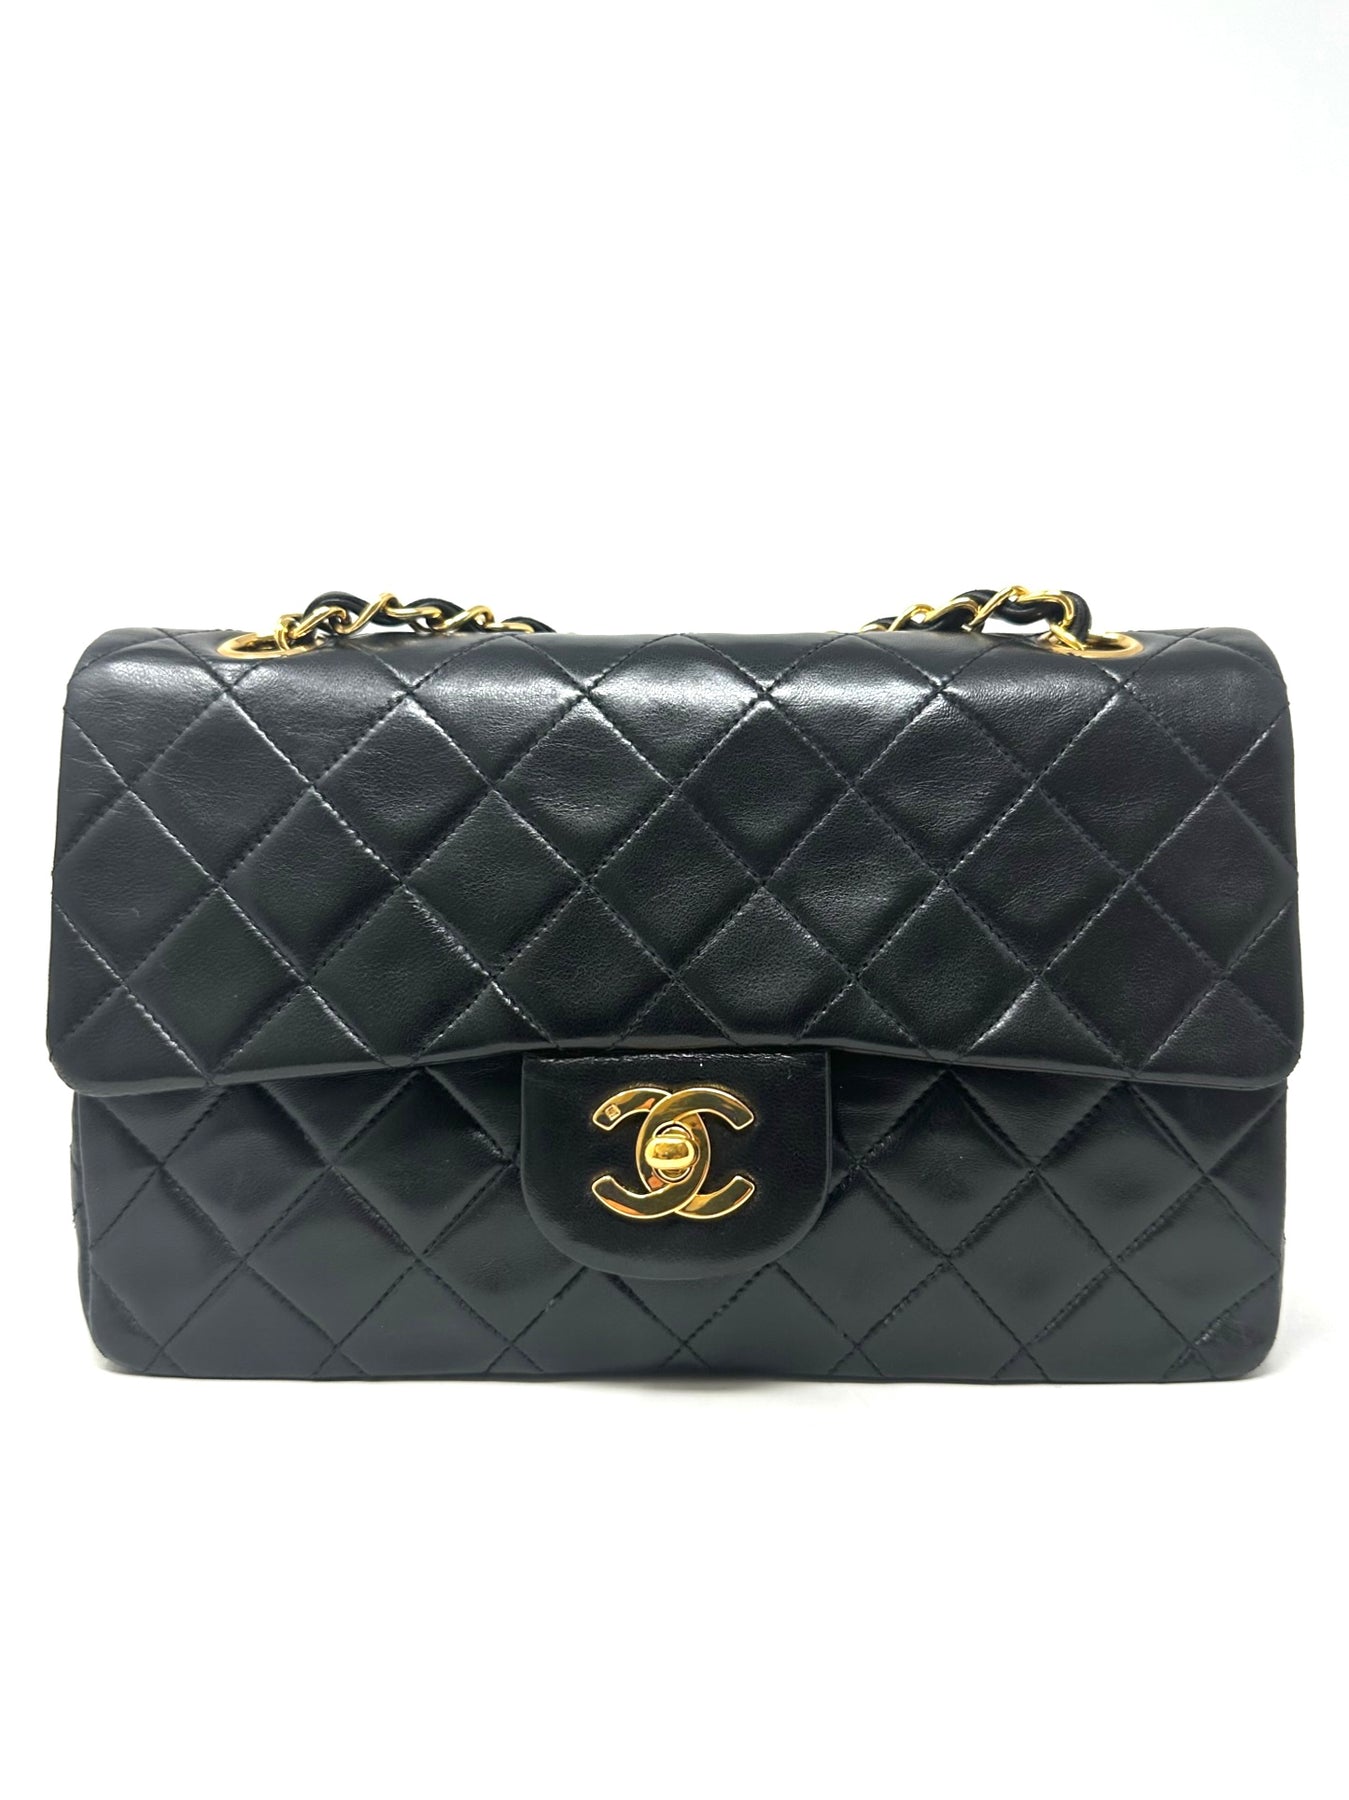 Chanel Vintage Green Quilted Leather Briefcase Shoulder Bag - Chanel